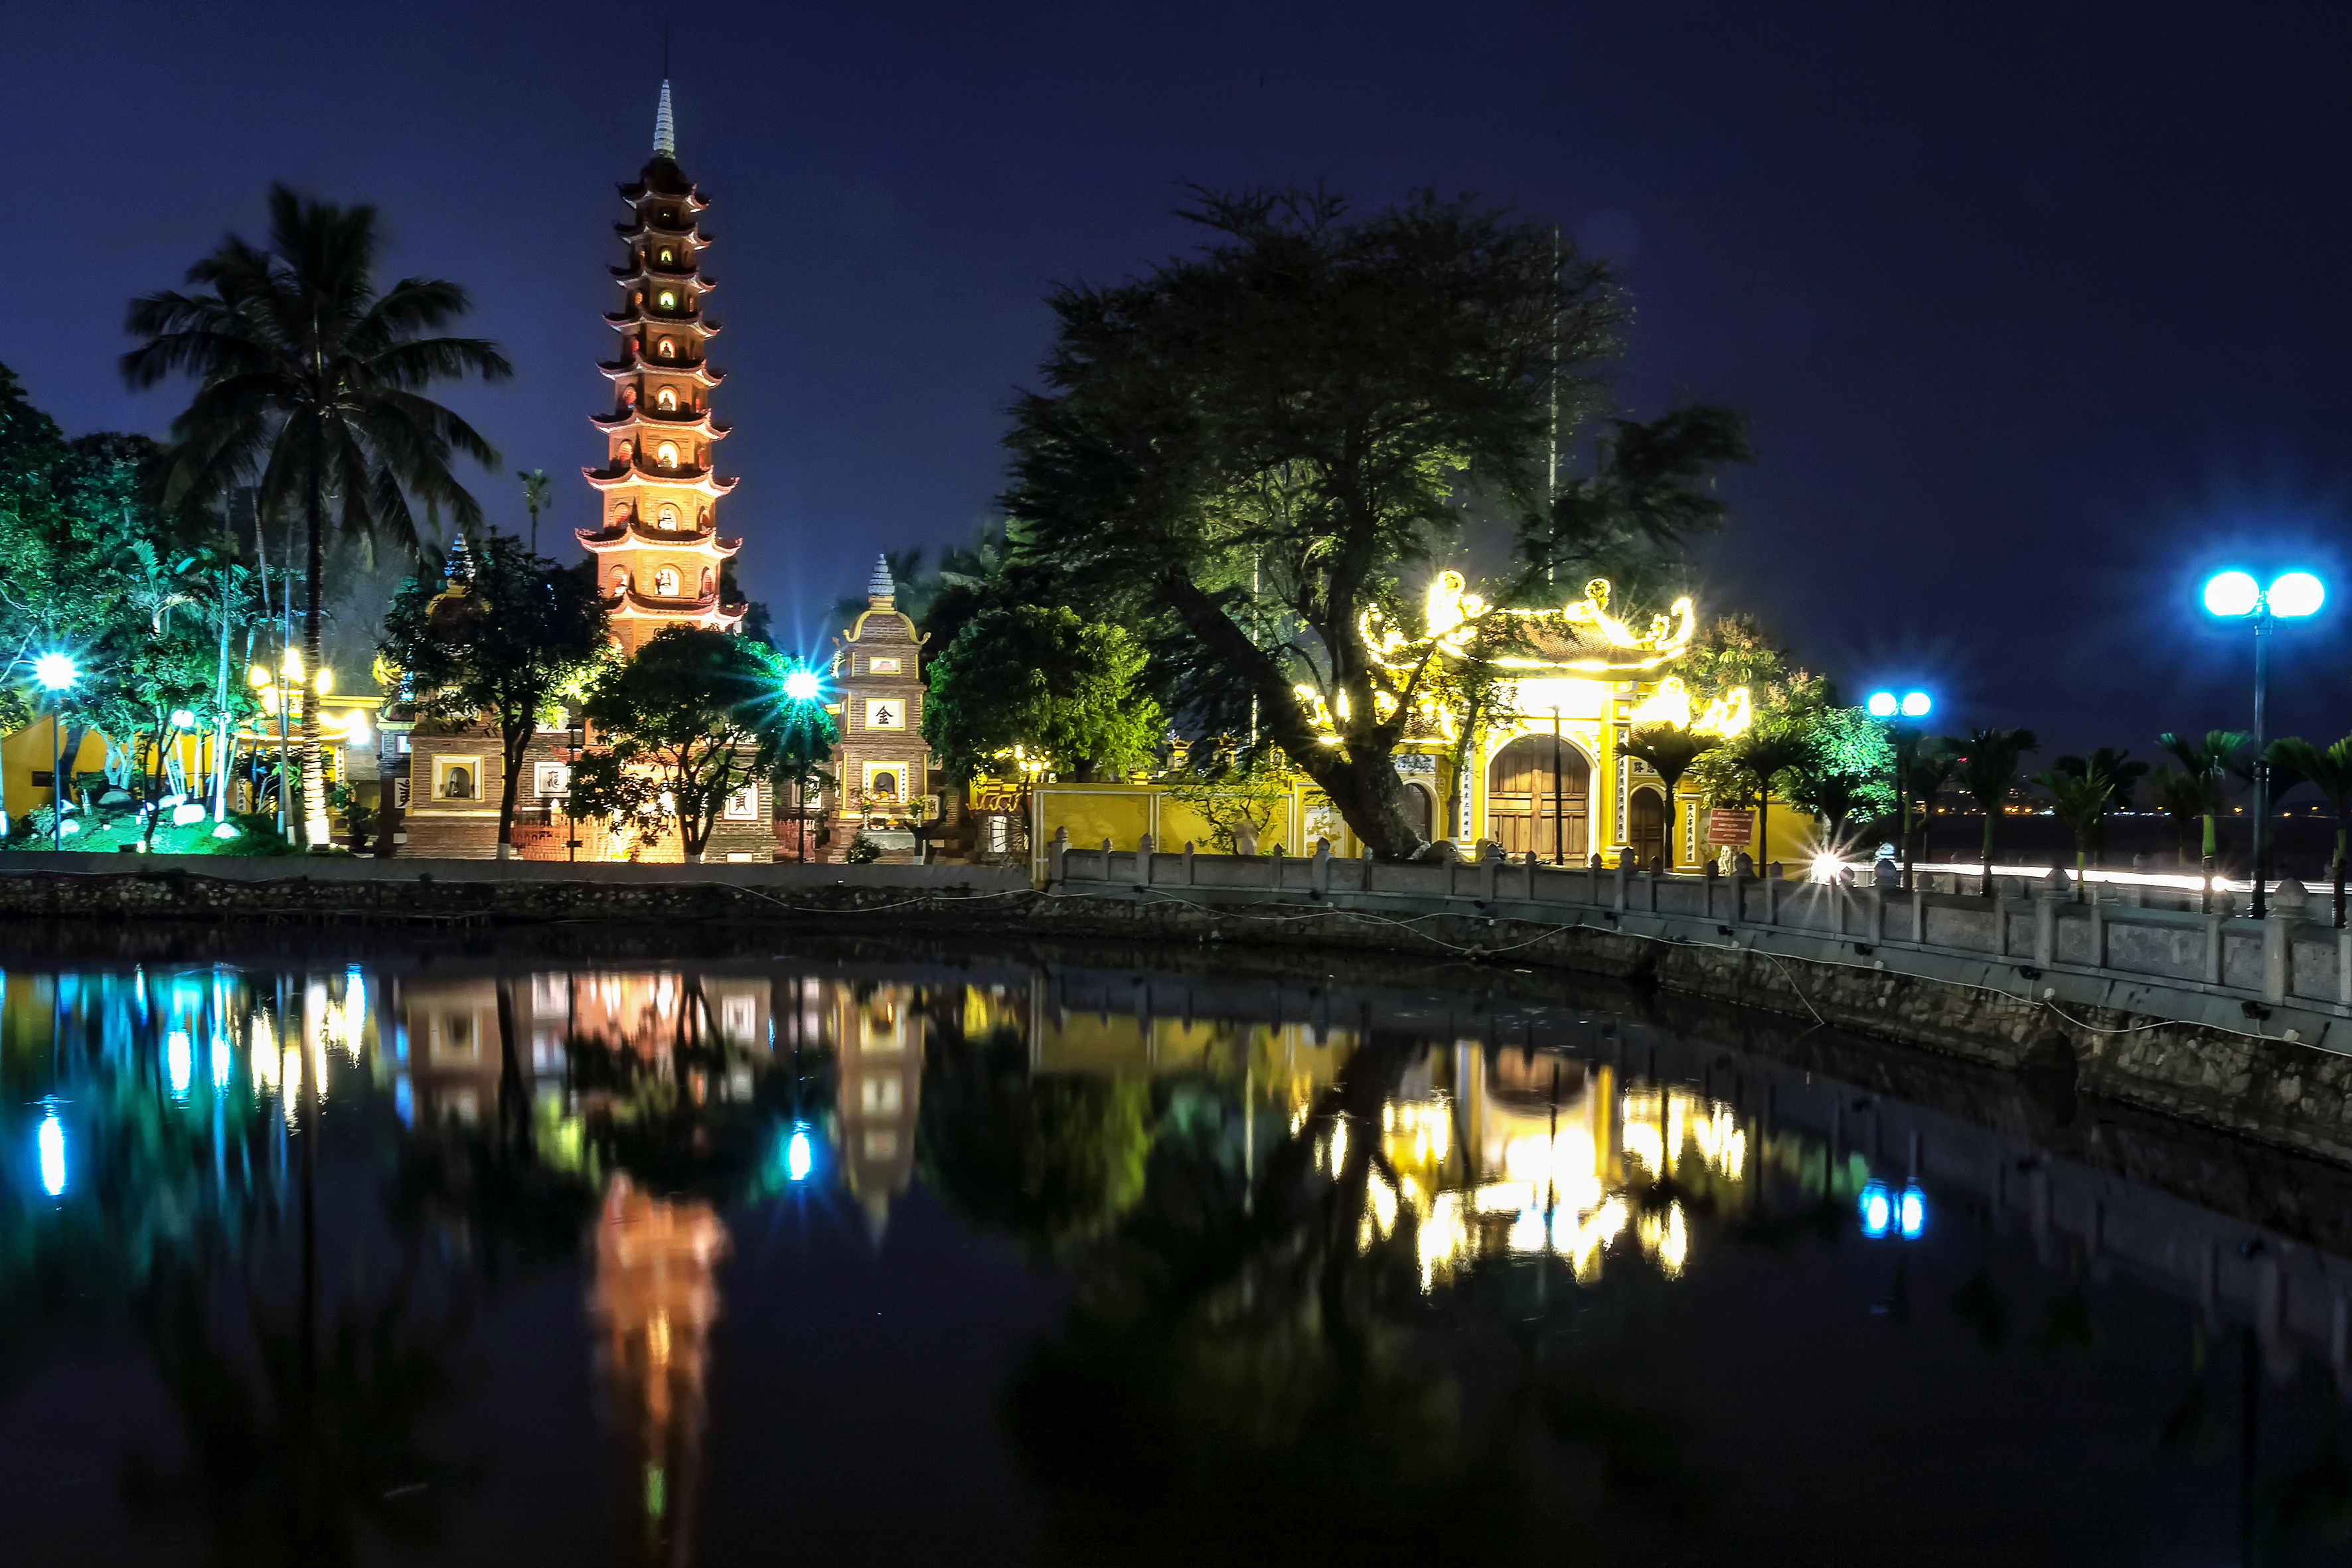 Tran Quoc Pagoda in Hanoi city, Vietnam